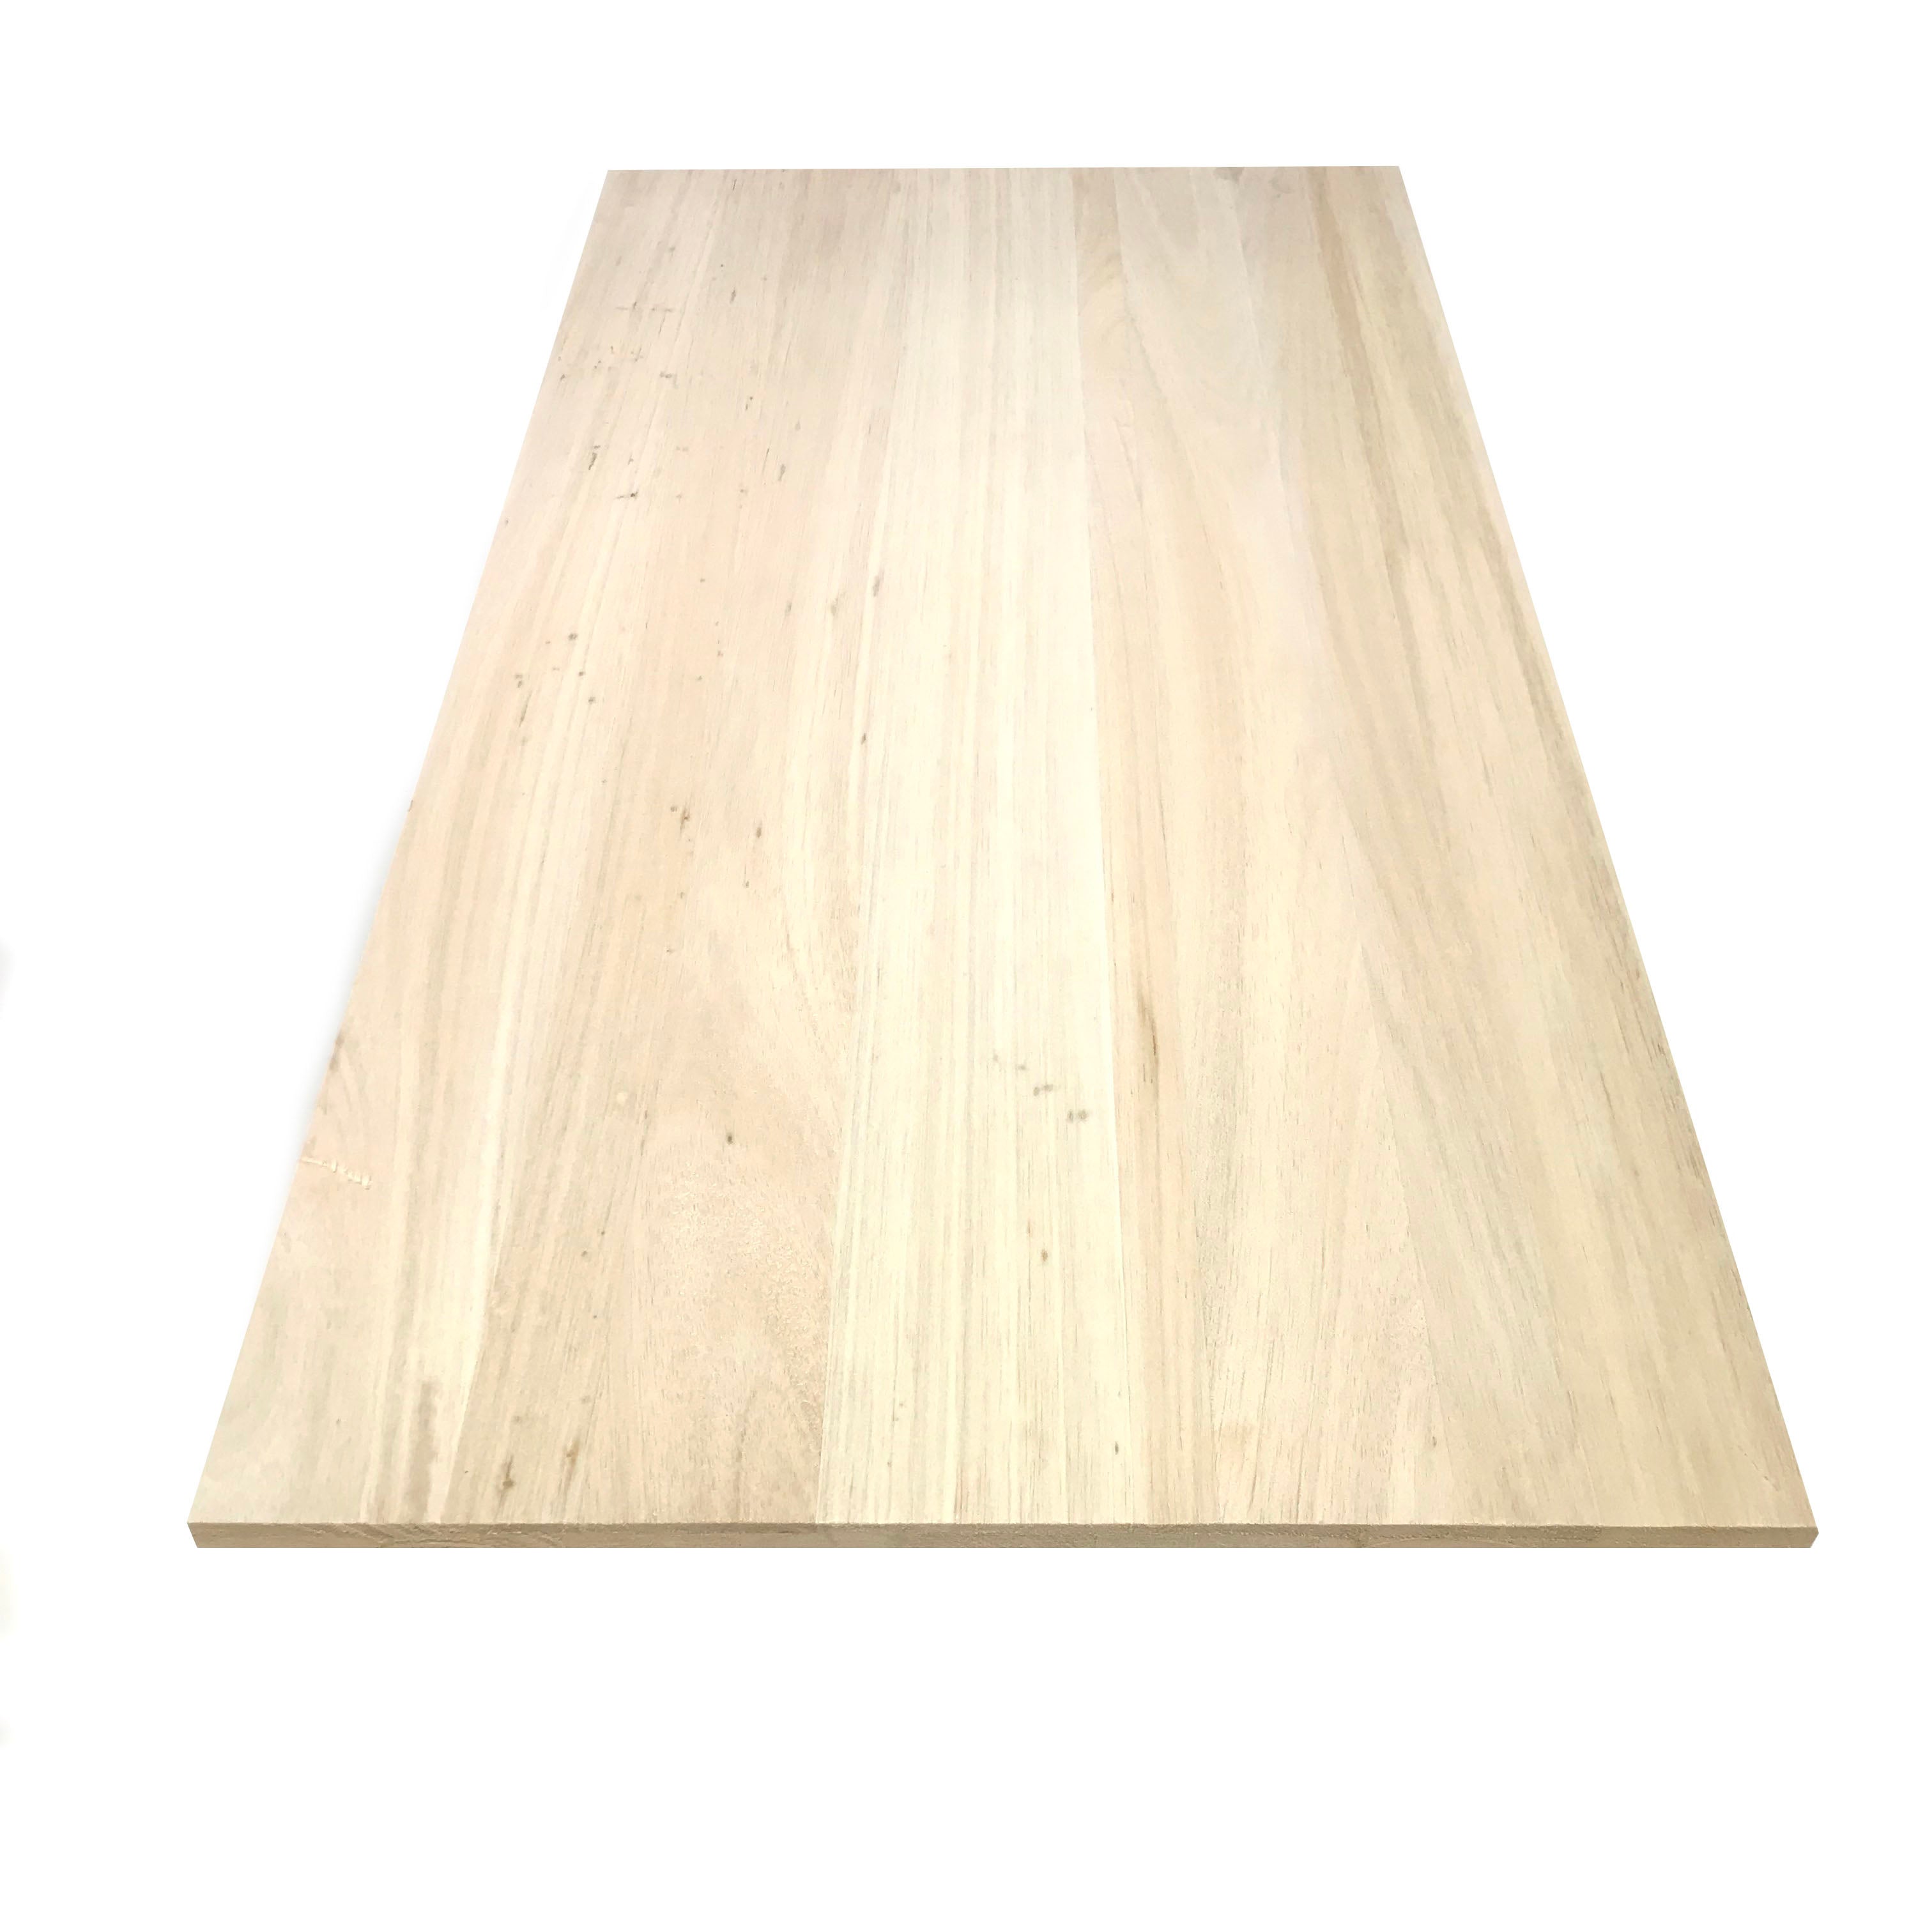 Balsa Wood Raw Breakaway Ultralight Wood Full Sheet 48 x 24 x 0.375 Inches